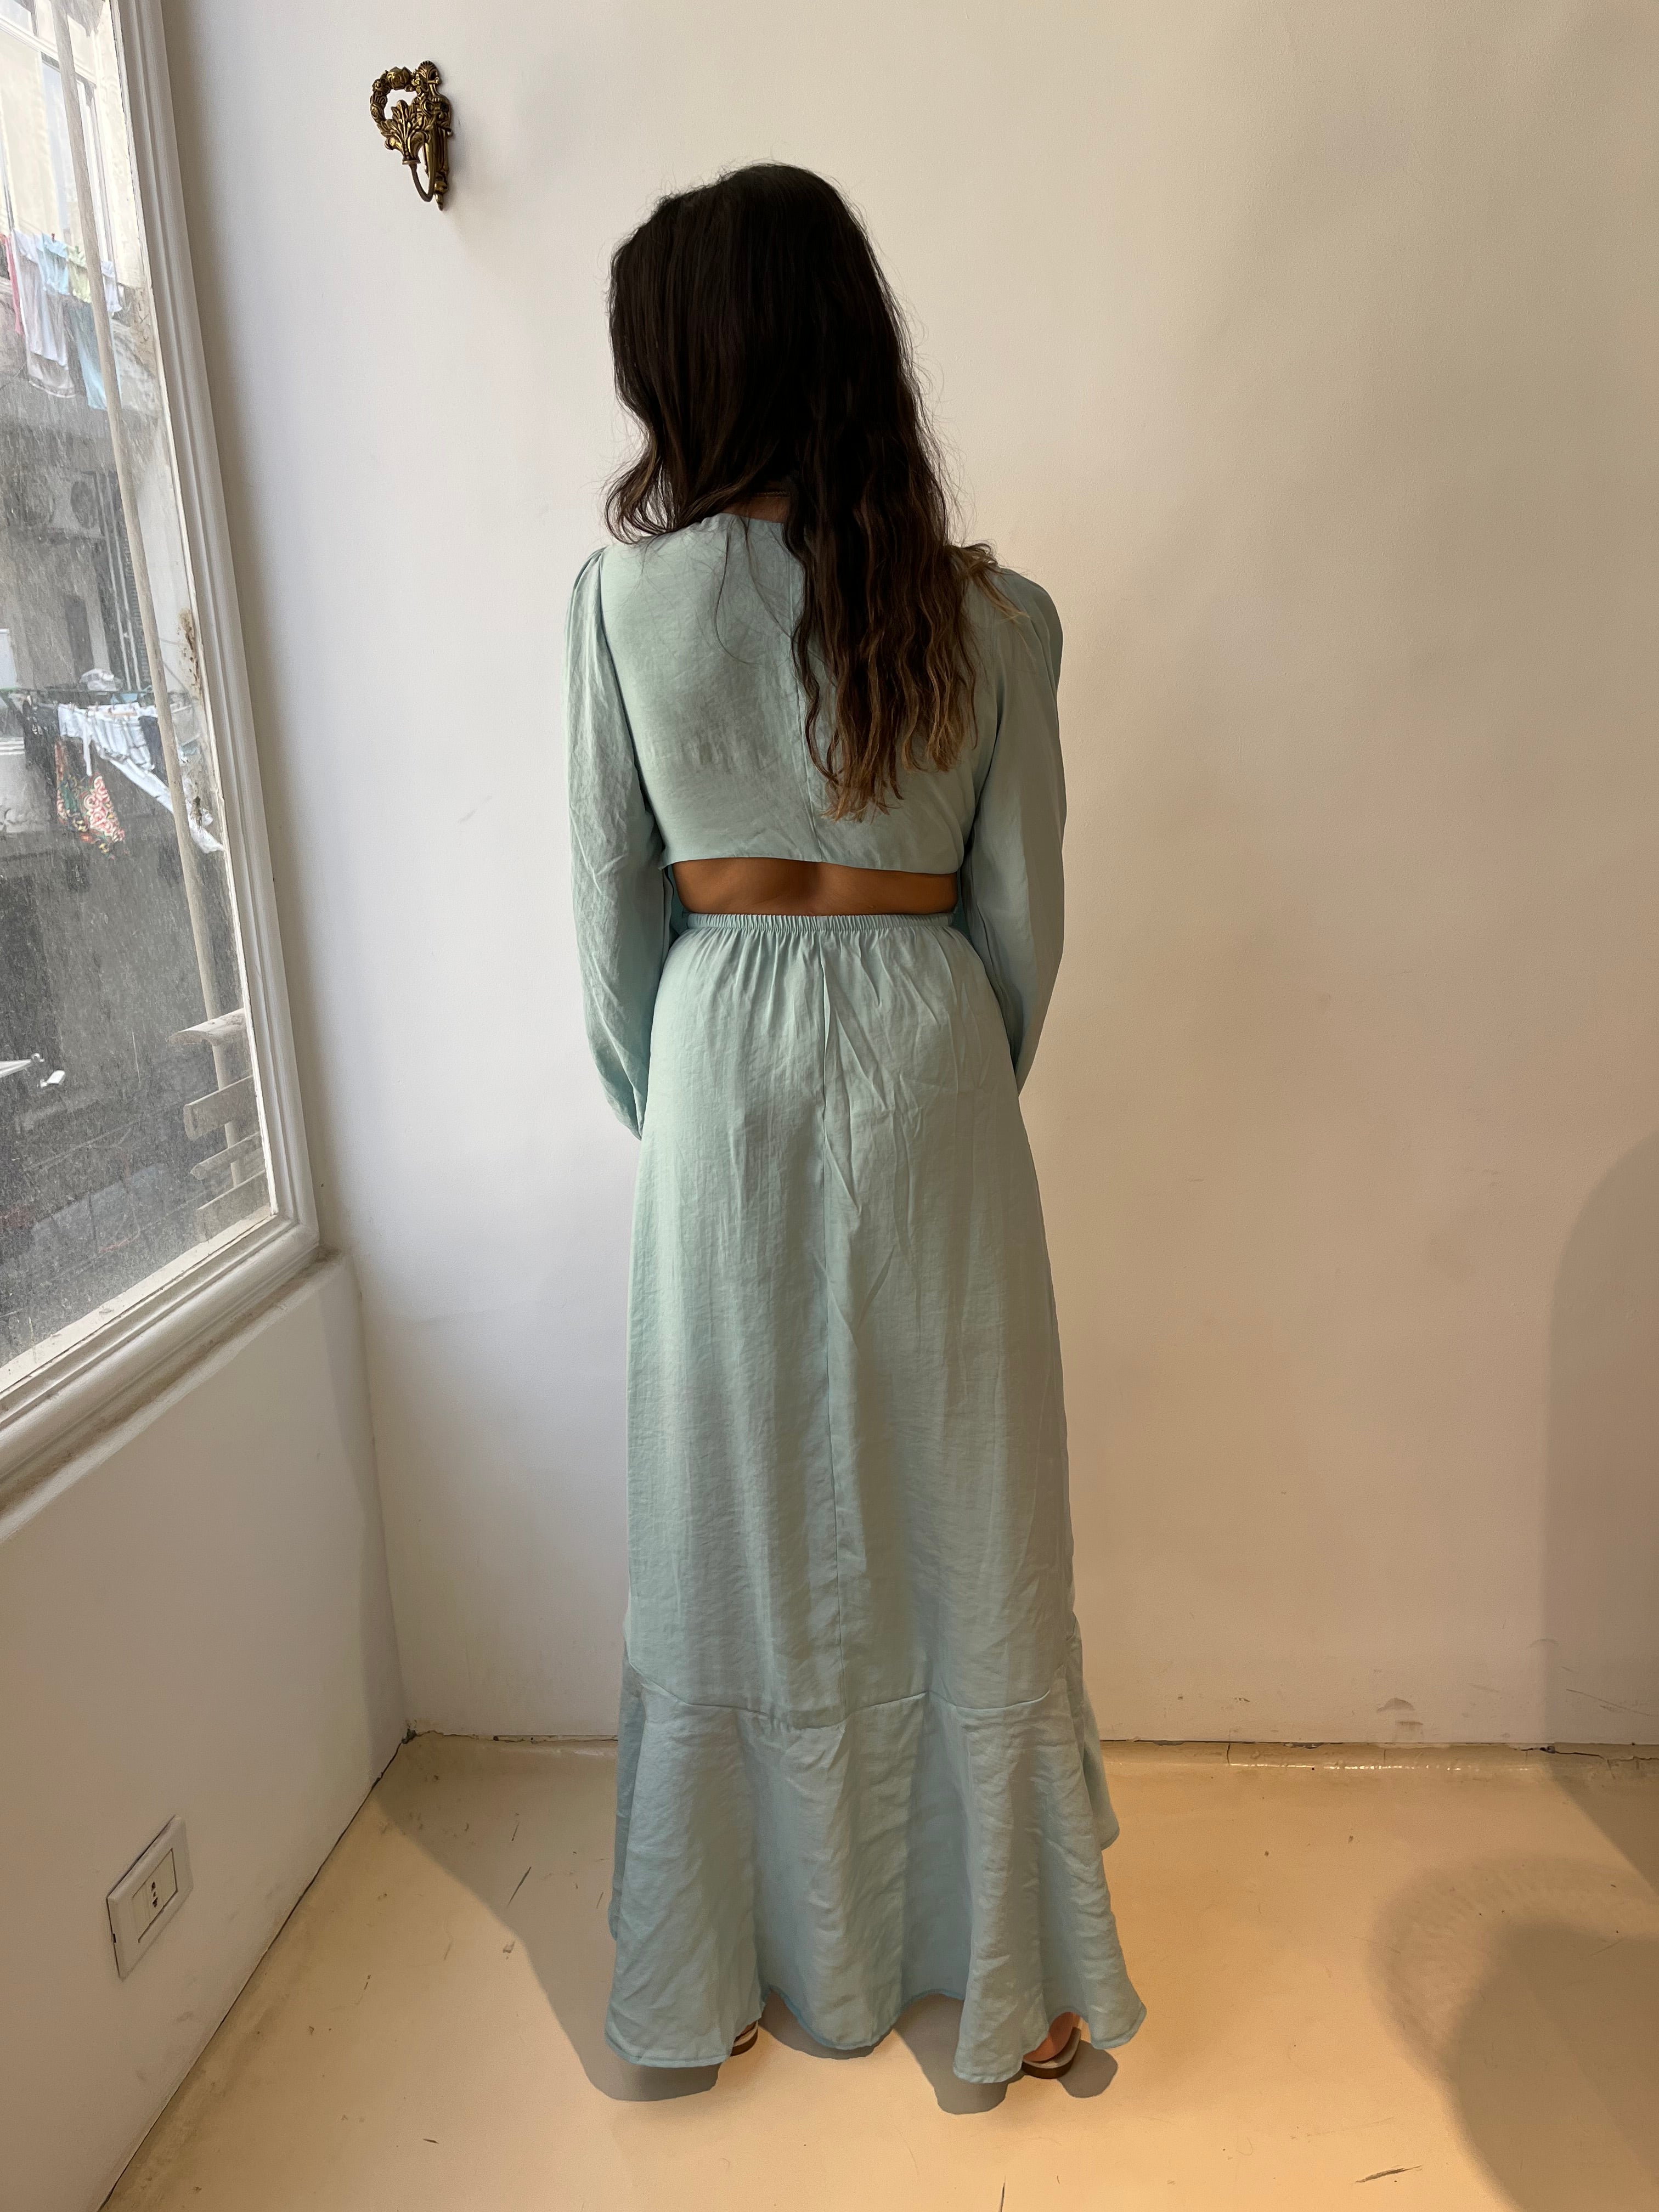 Long sleeve backless dress in Mint